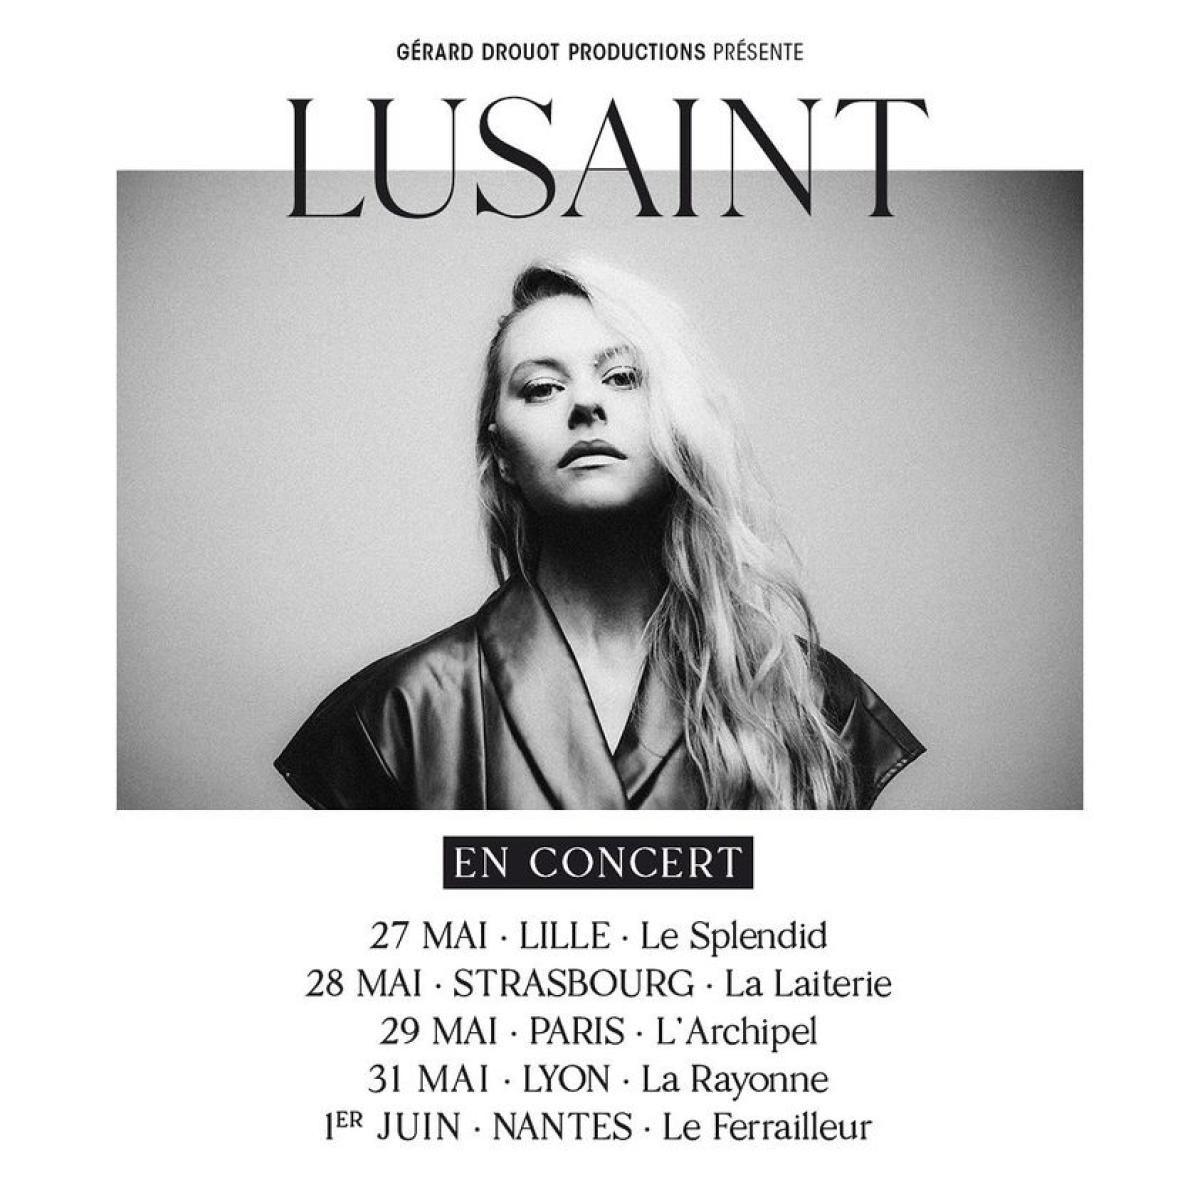 Lusaint at La Rayonne Tickets